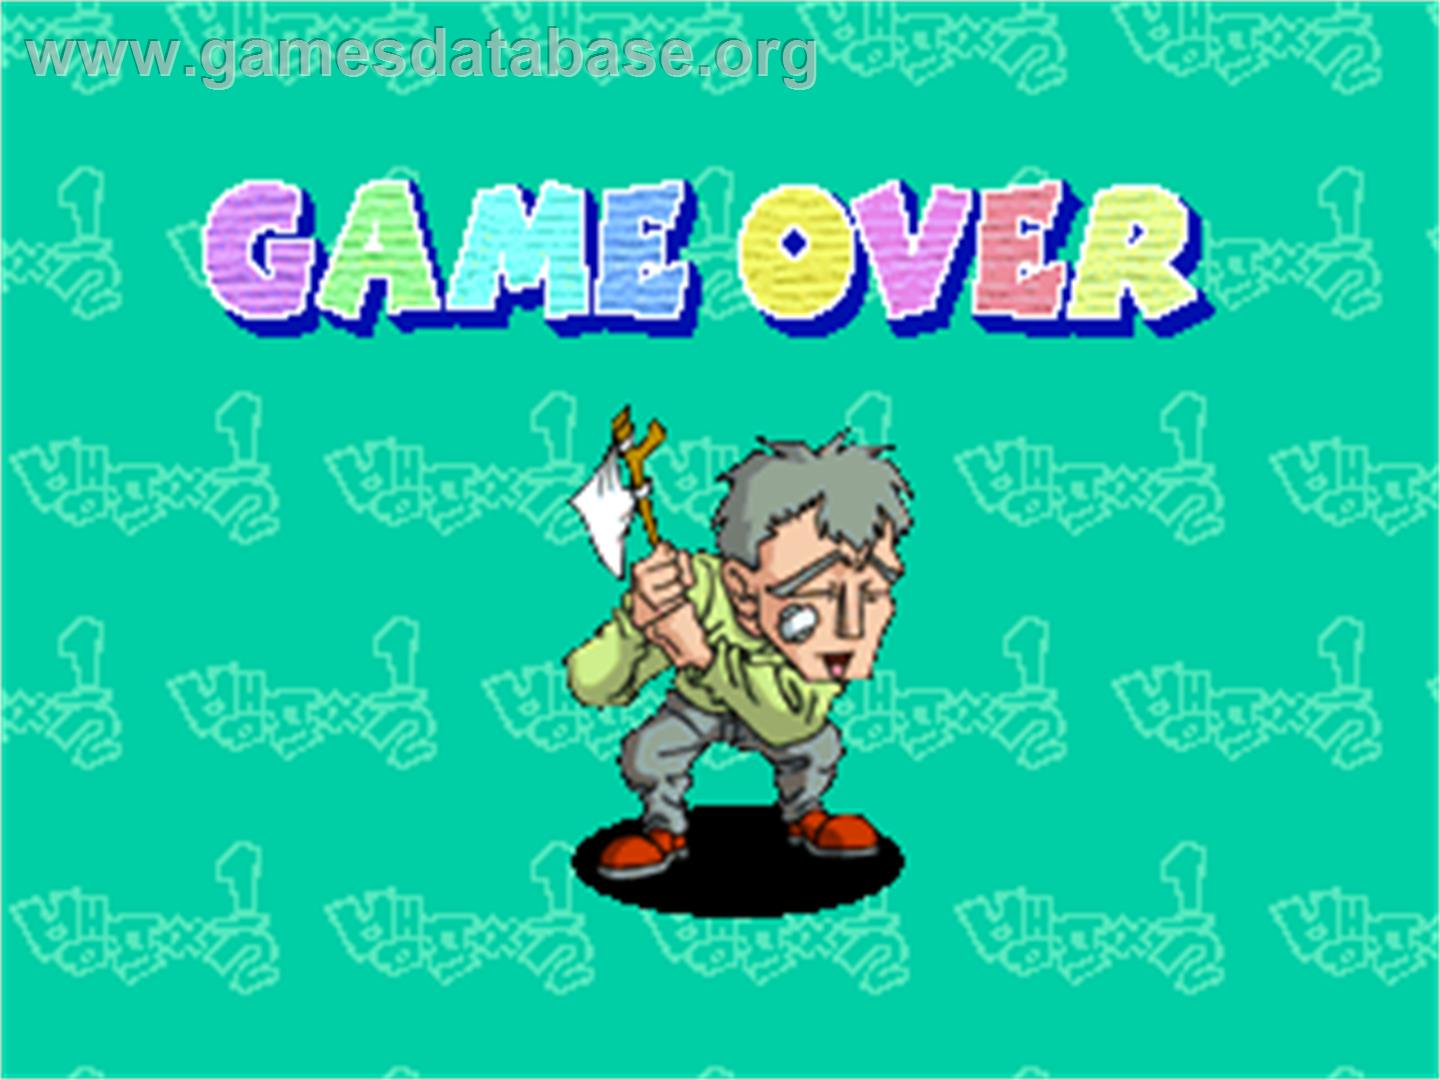 Vamf x1/2 - Arcade - Artwork - Game Over Screen